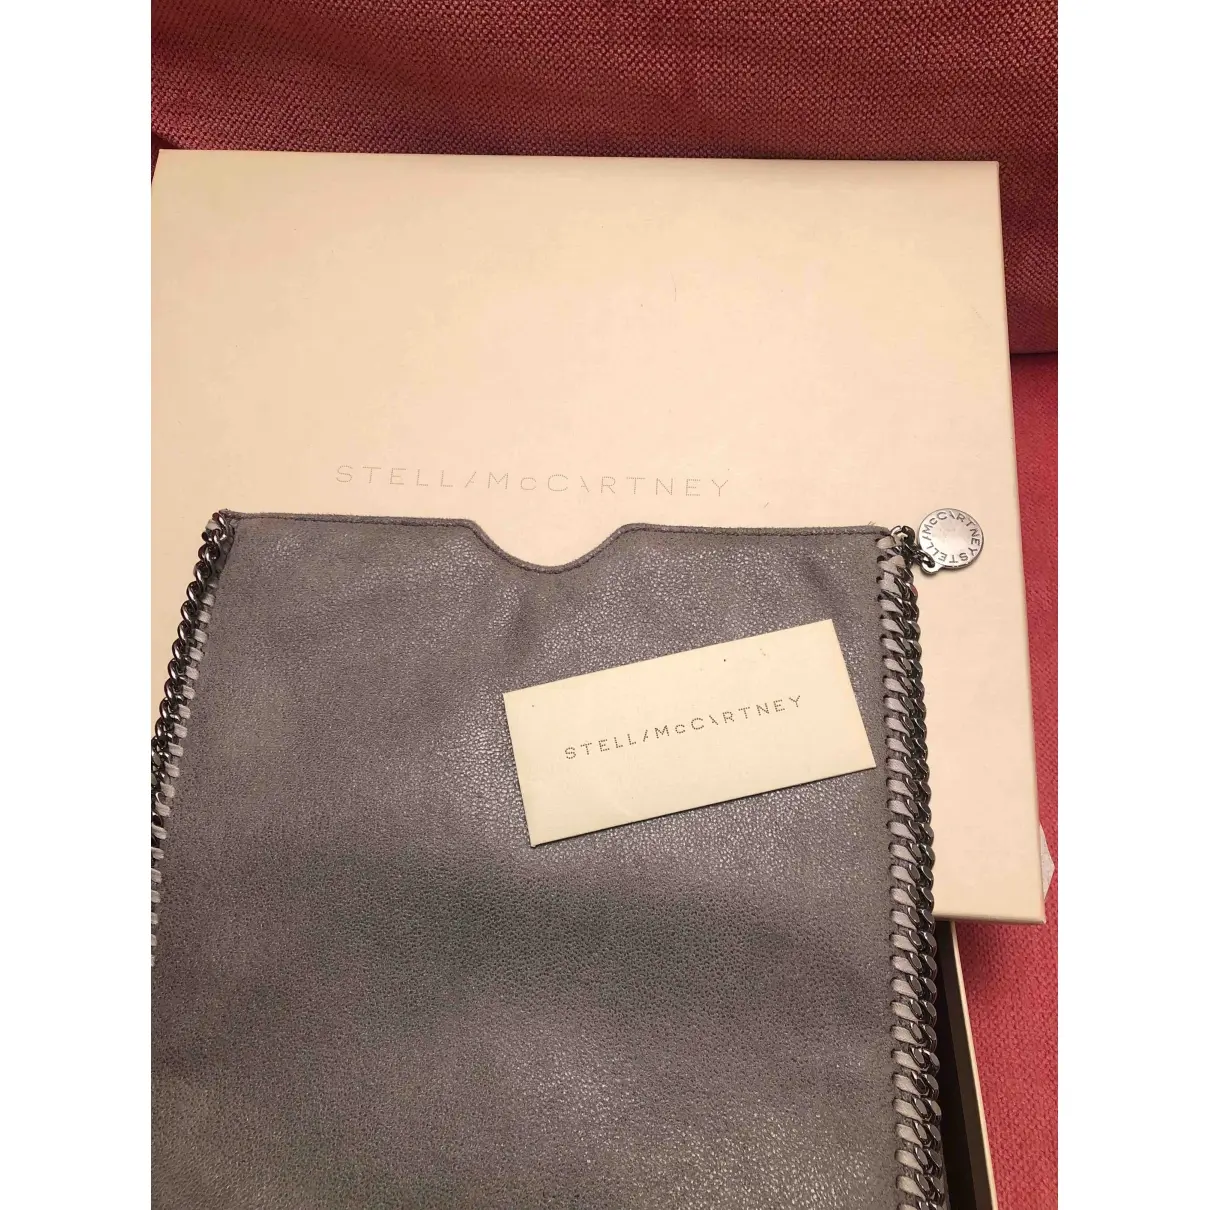 Buy Stella McCartney Cloth ipad case online